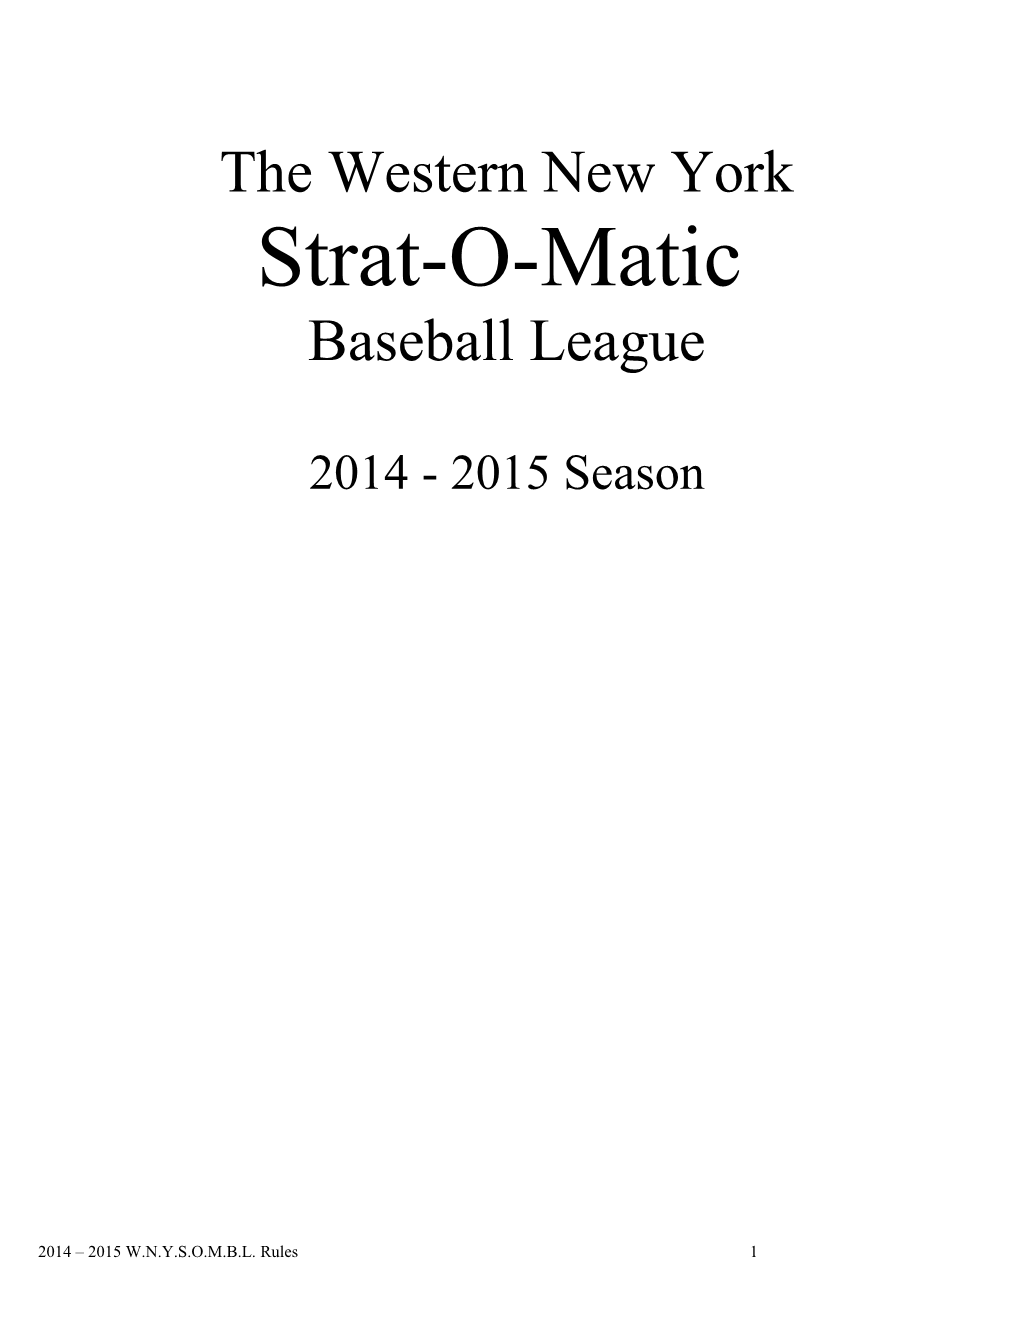 The Western New York Strat-O-Matic Baseball League